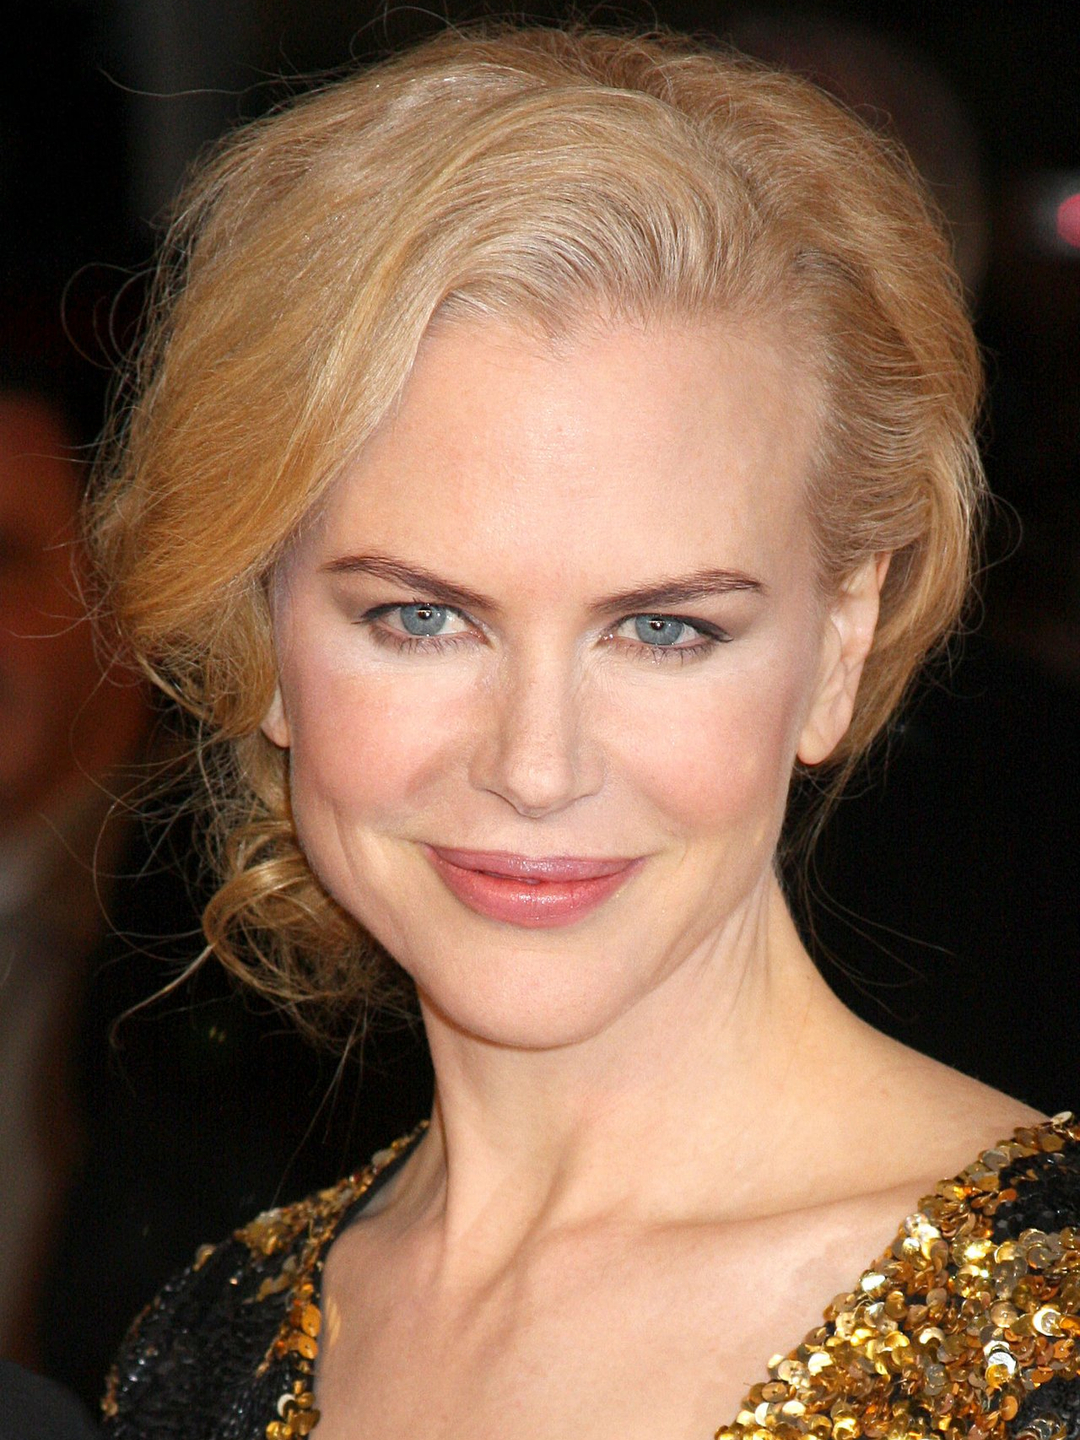 Nicole Kidman dating history